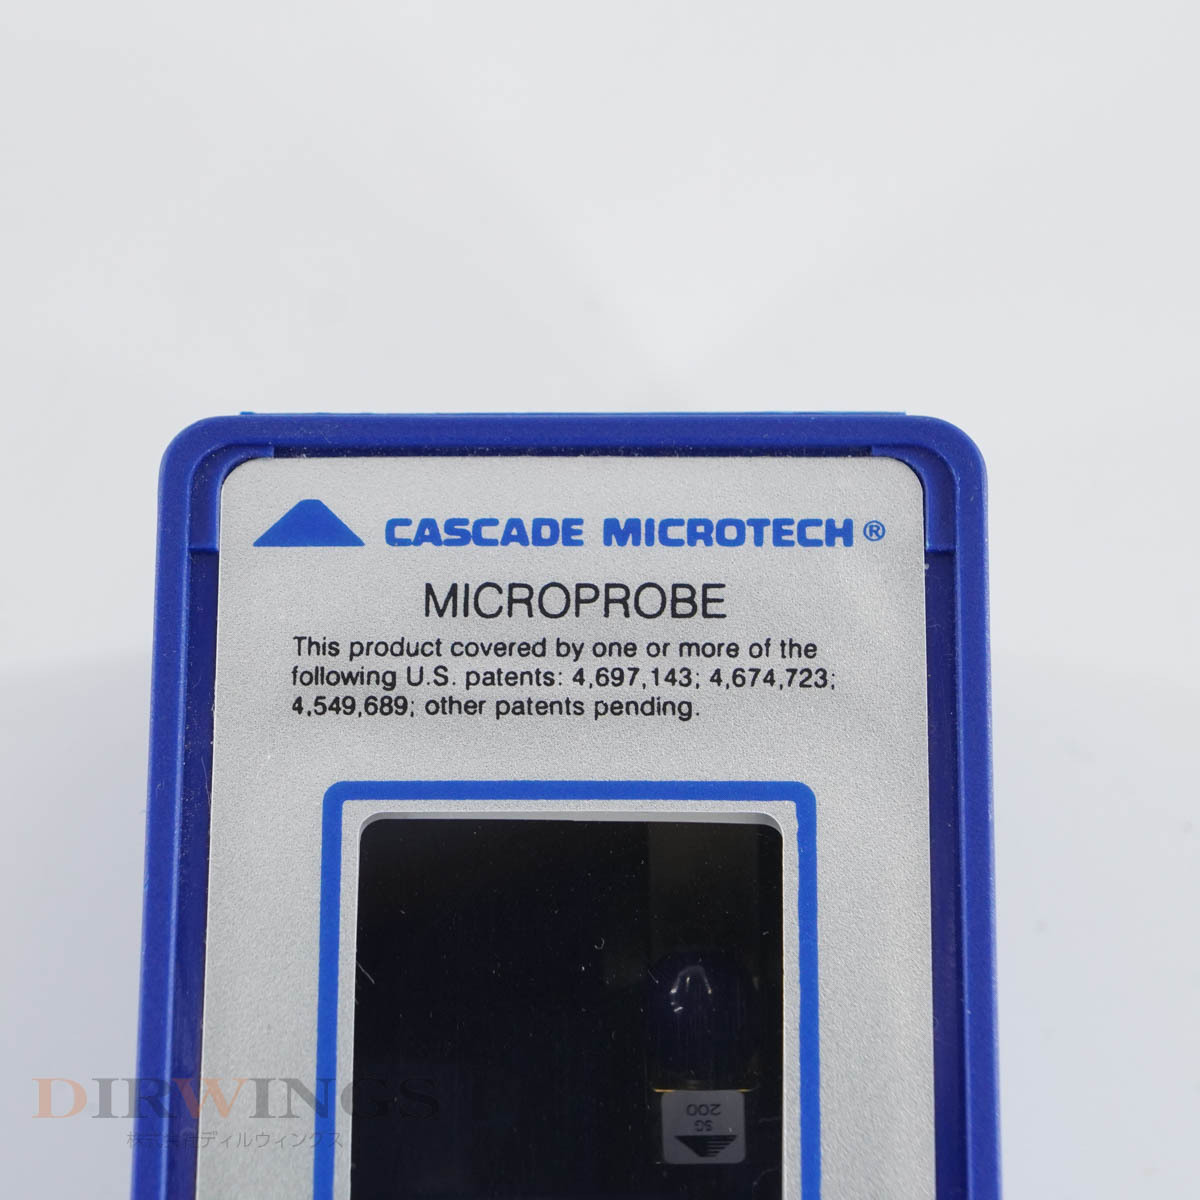 [DW] 8 day guarantee FPC-SG-200 CASCADE MICROTECH MICROPROBE rental ke-do micro Tec micro Probe [05791-0825]